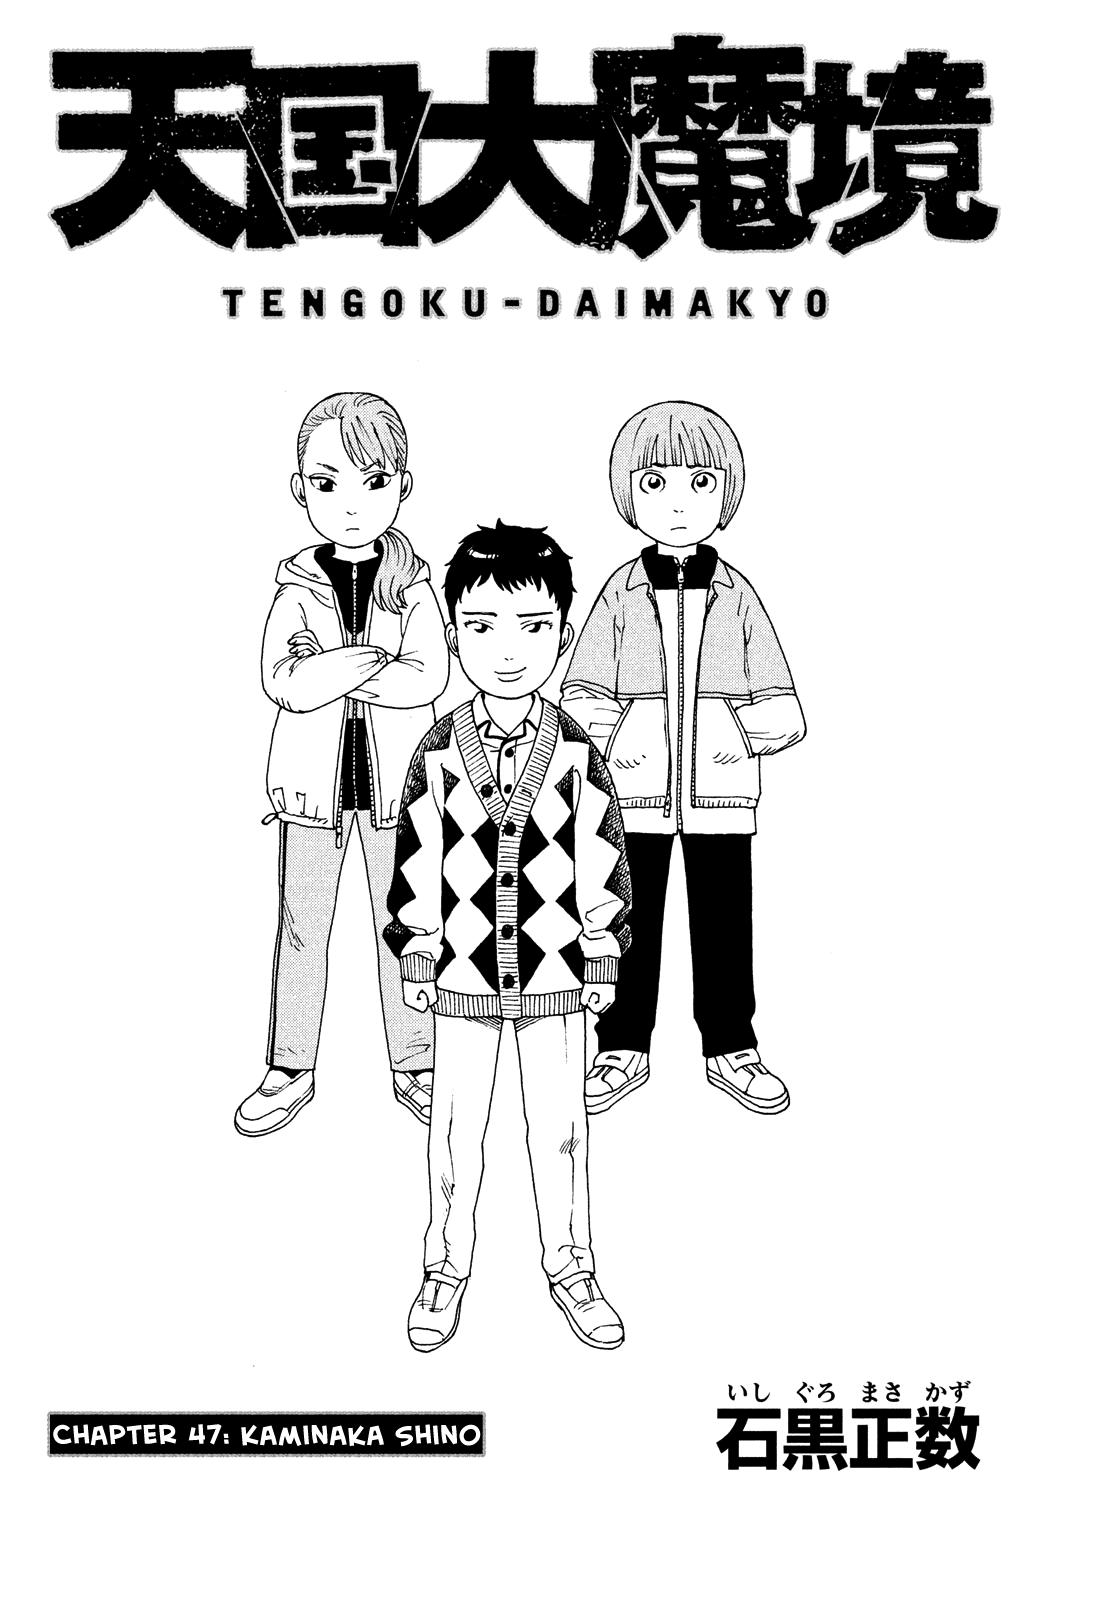 Read Tengoku Daimakyou Vol.1 Chapter 2: Maru - Manganelo